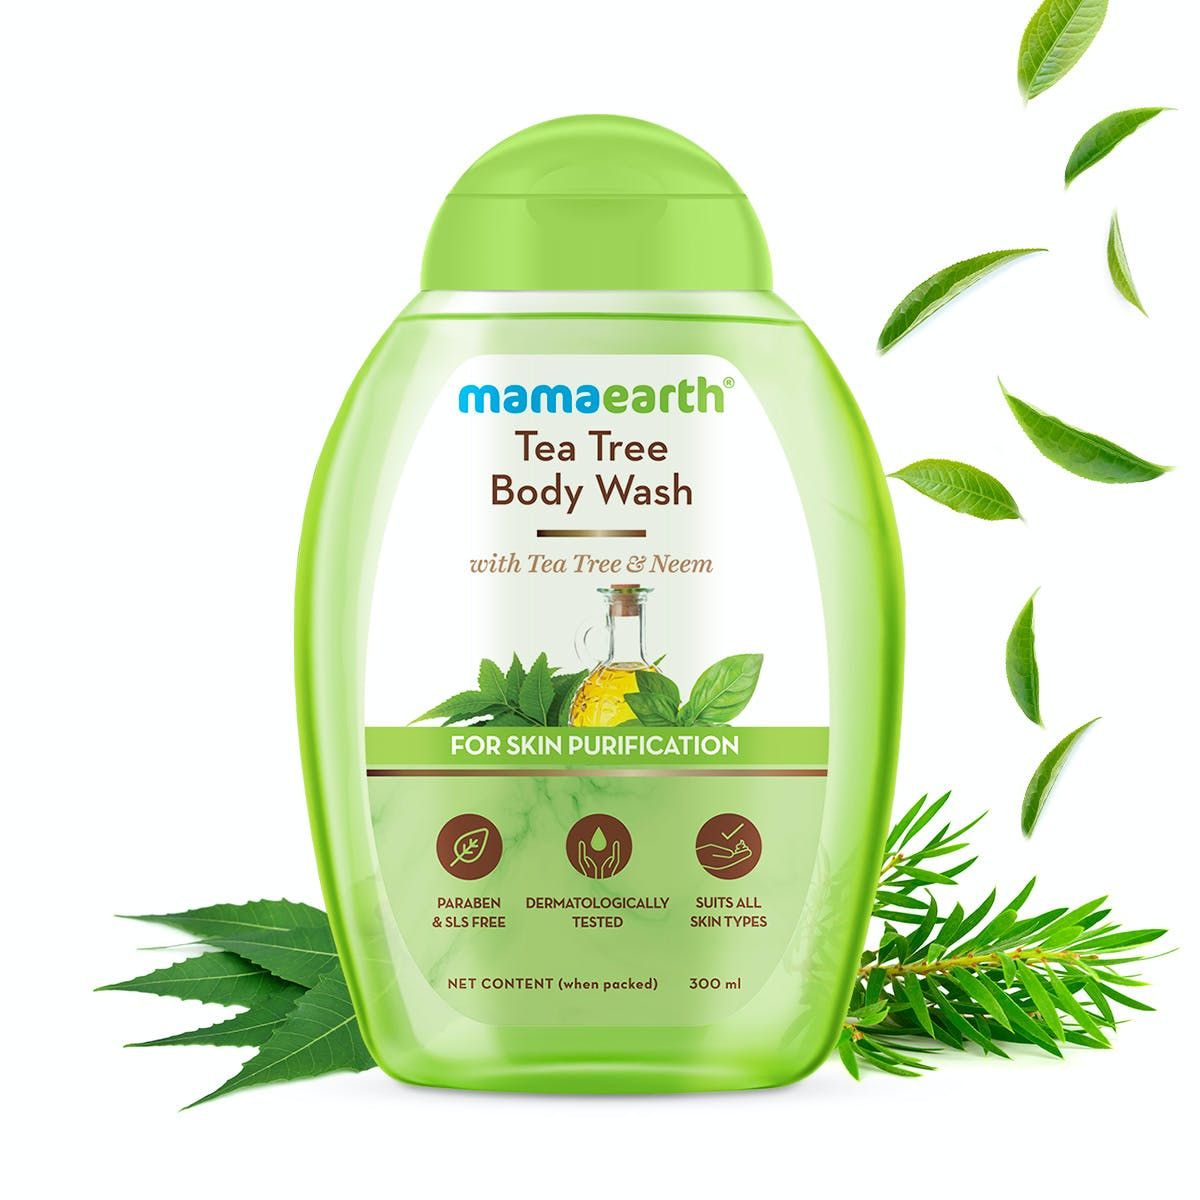 Mamaearth Tea Tree Body Wash With Tea Tree And Neem For Skin Purification - 300ml